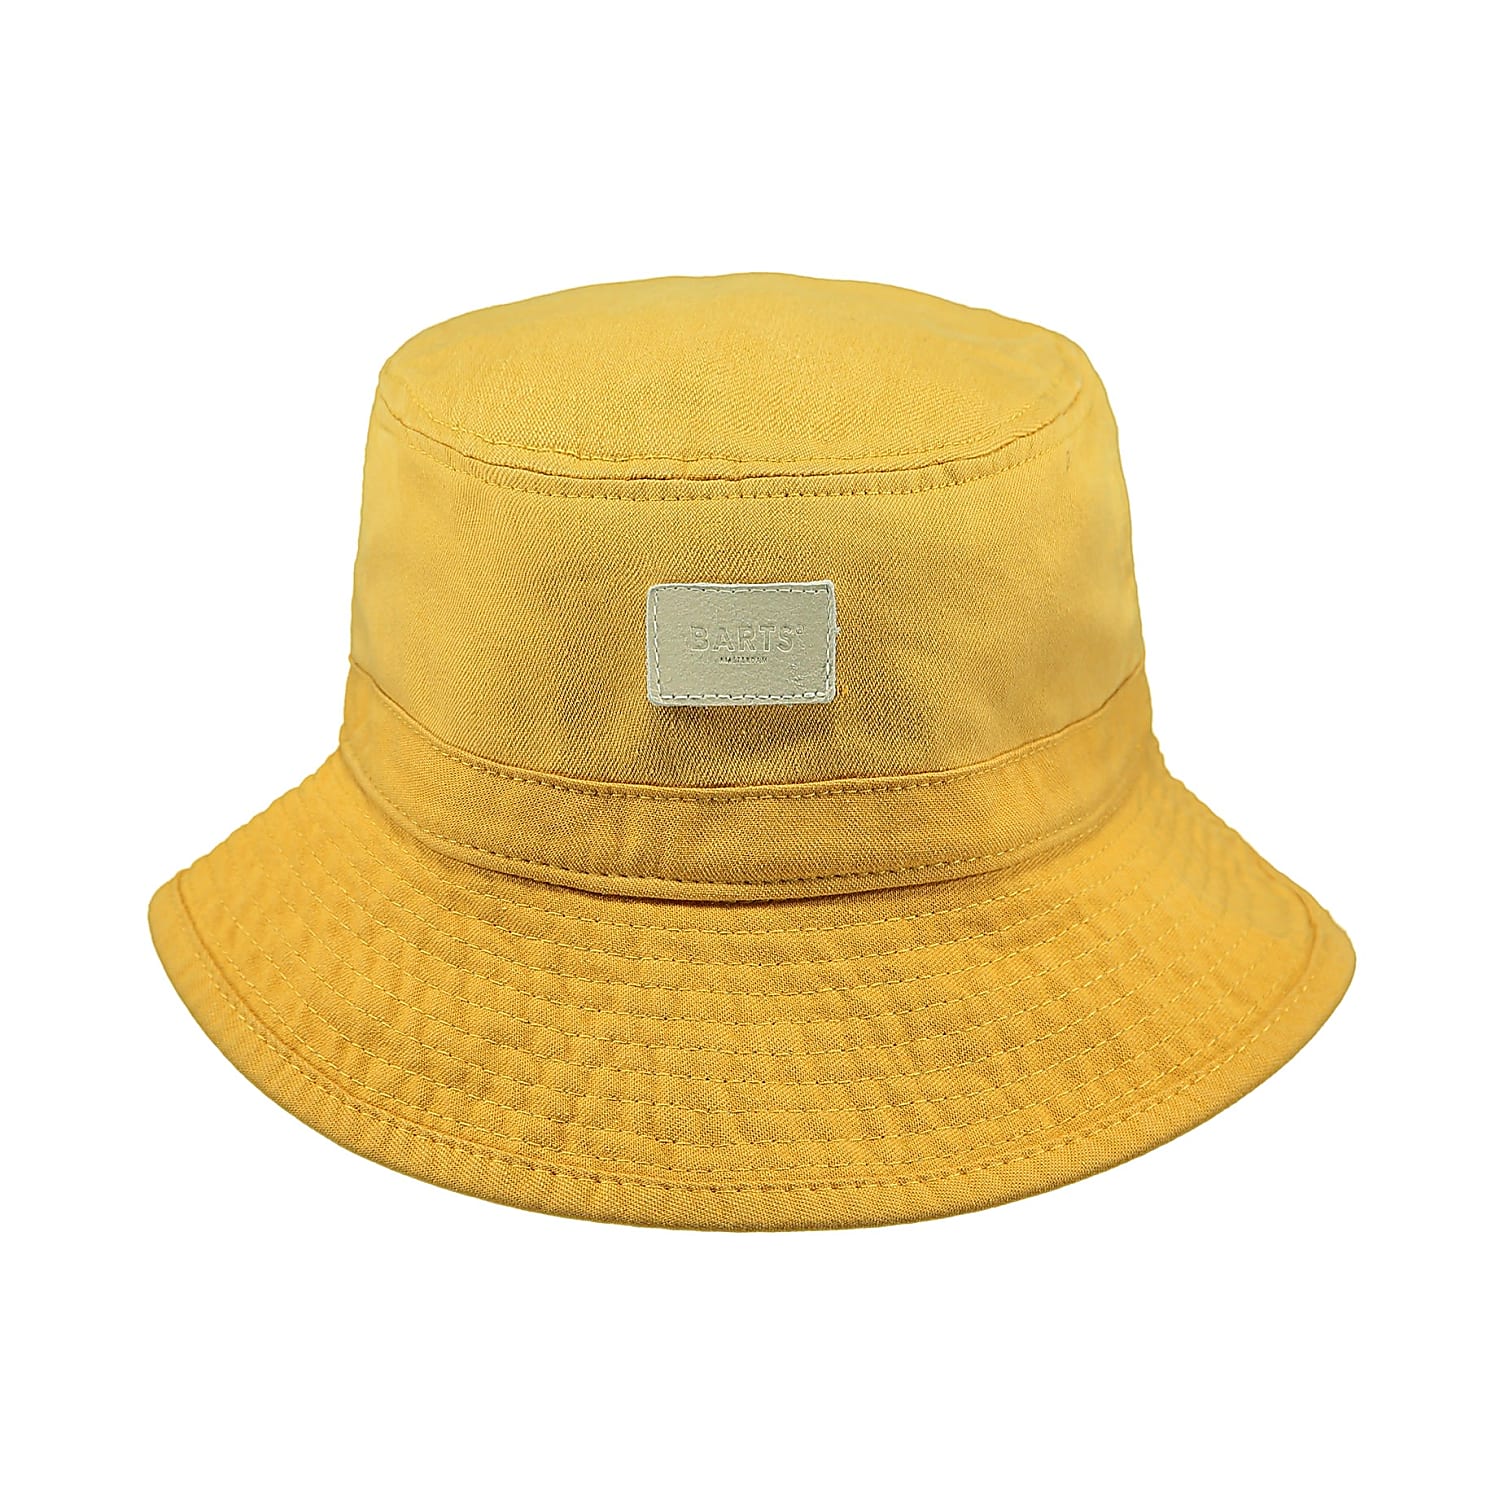 Barts KIDS OROHENA HAT, Yellow Fast - shipping and cheap